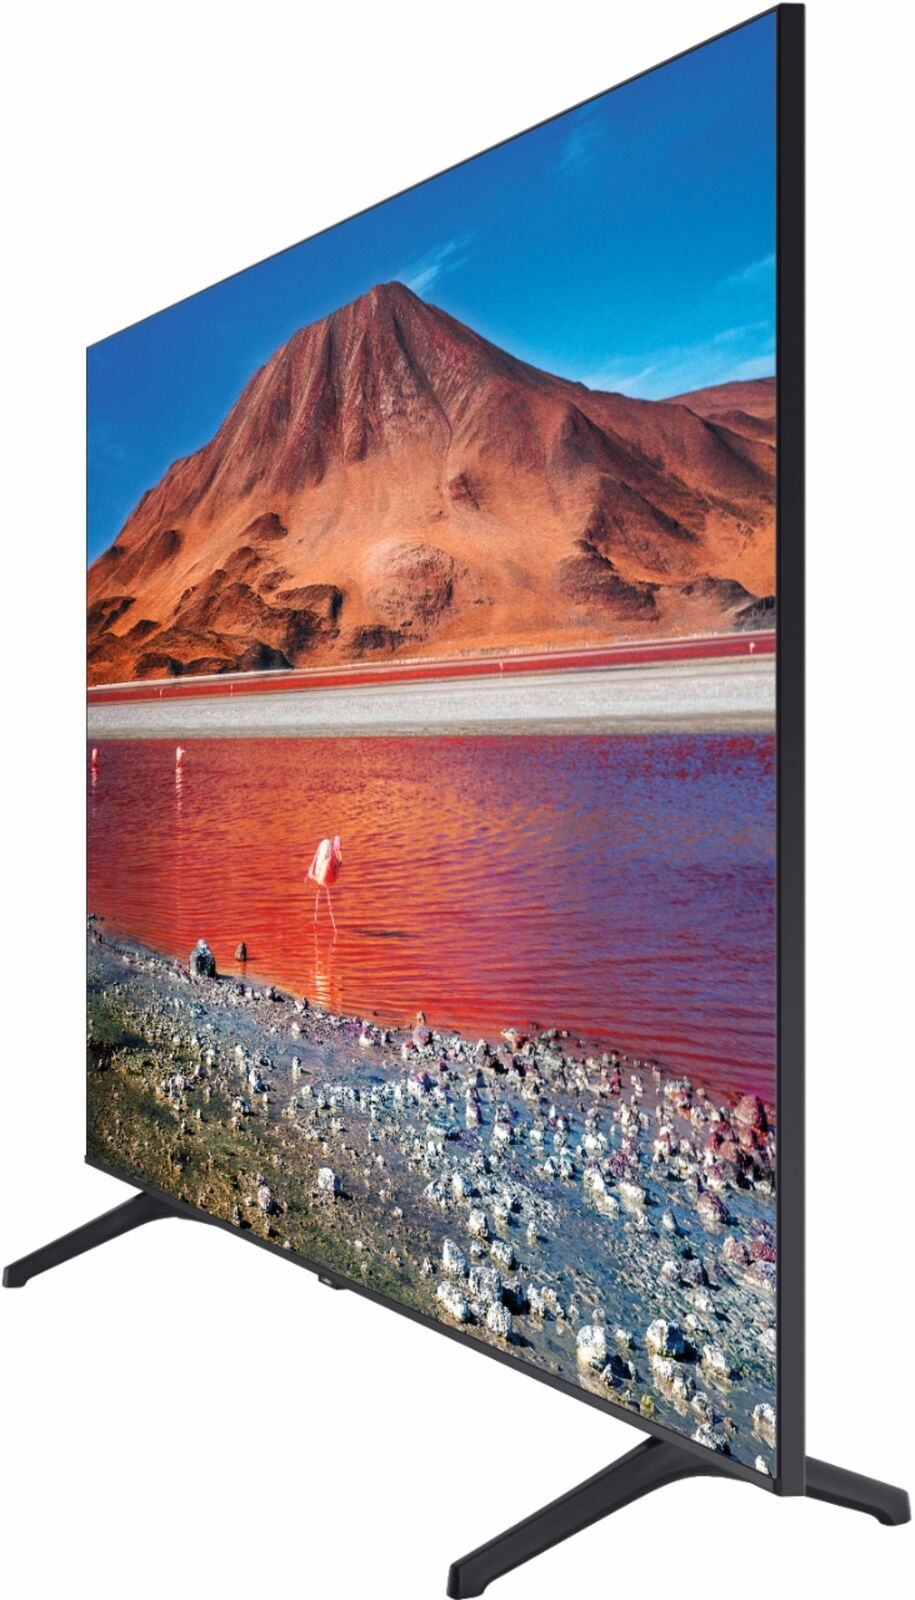 Samsung Crystal UHD 7 Series 50"TV MODEL: TU7000D